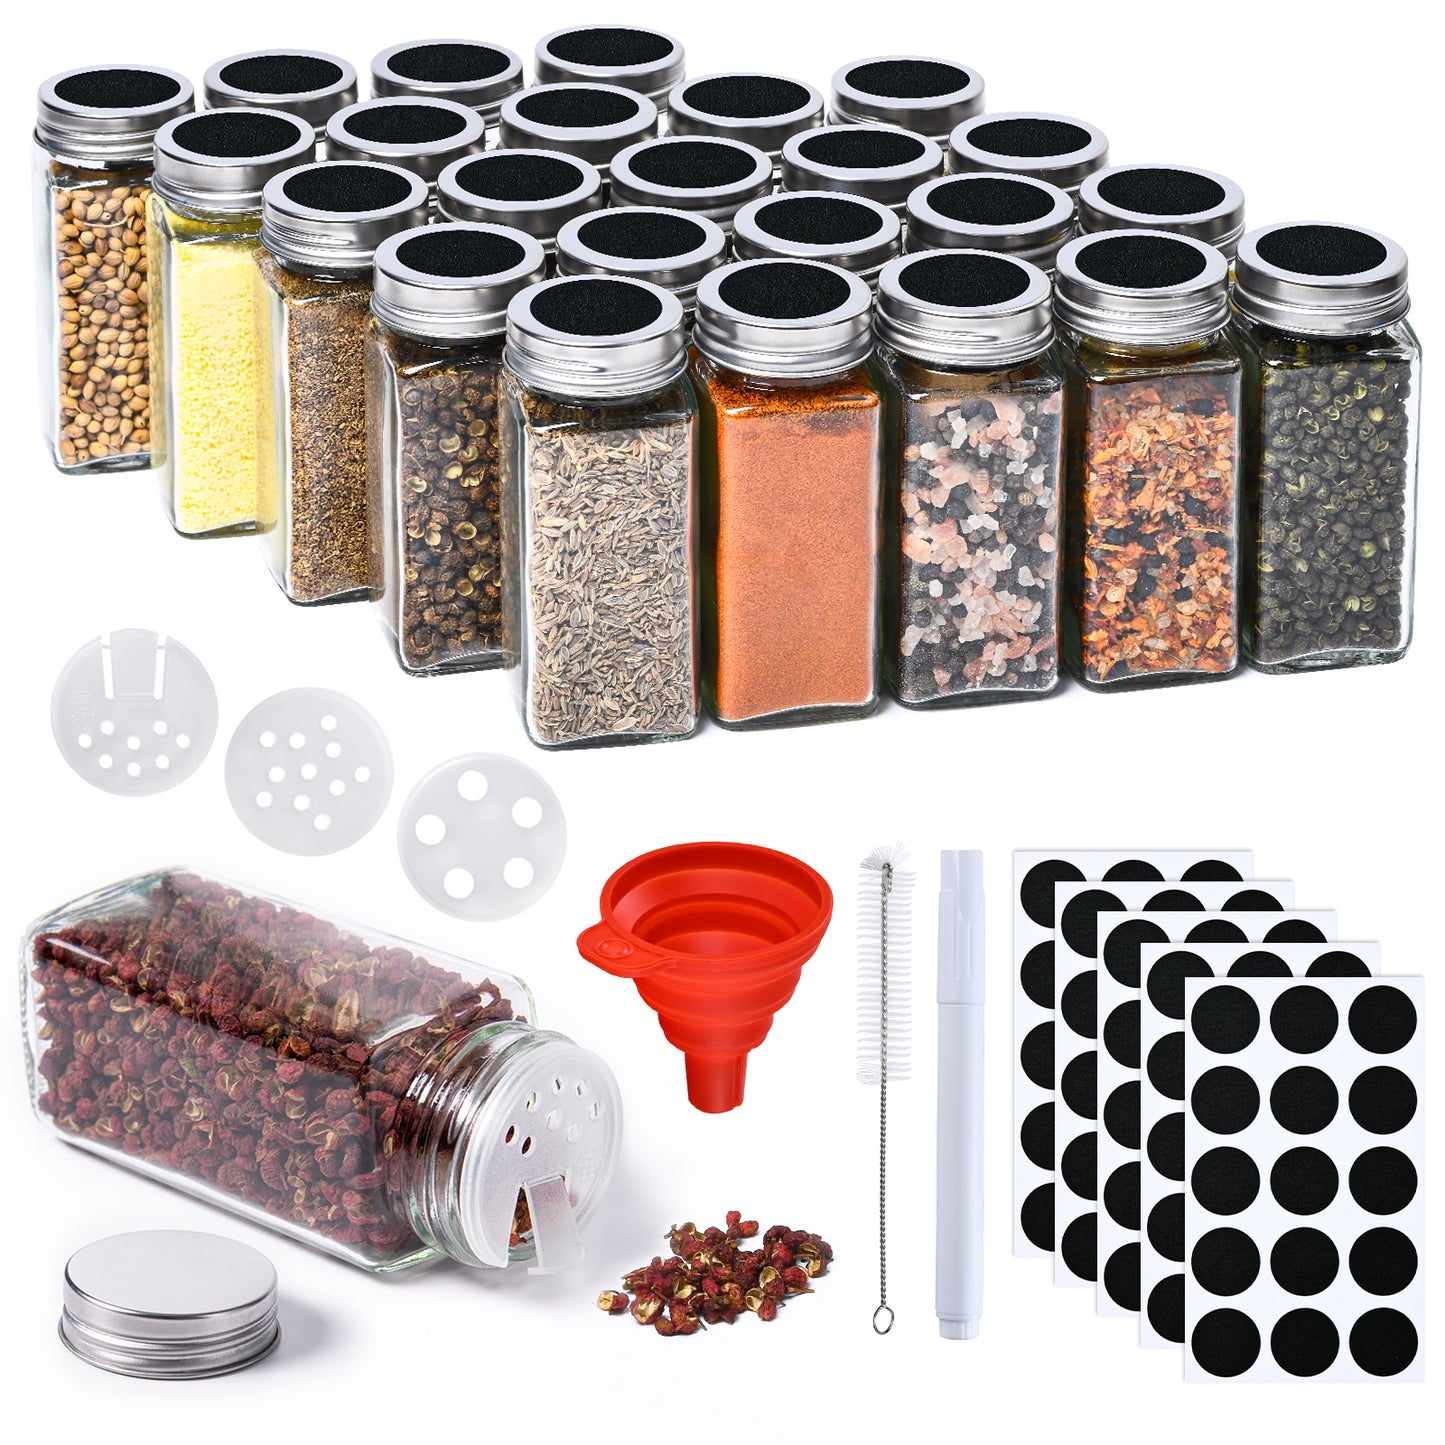 GoMaihe Spice Jars 25 Set, Transparent Storage Jars with Lids/Mason Jars/Glass Jars, for Convenient and Practical Storage of Spices